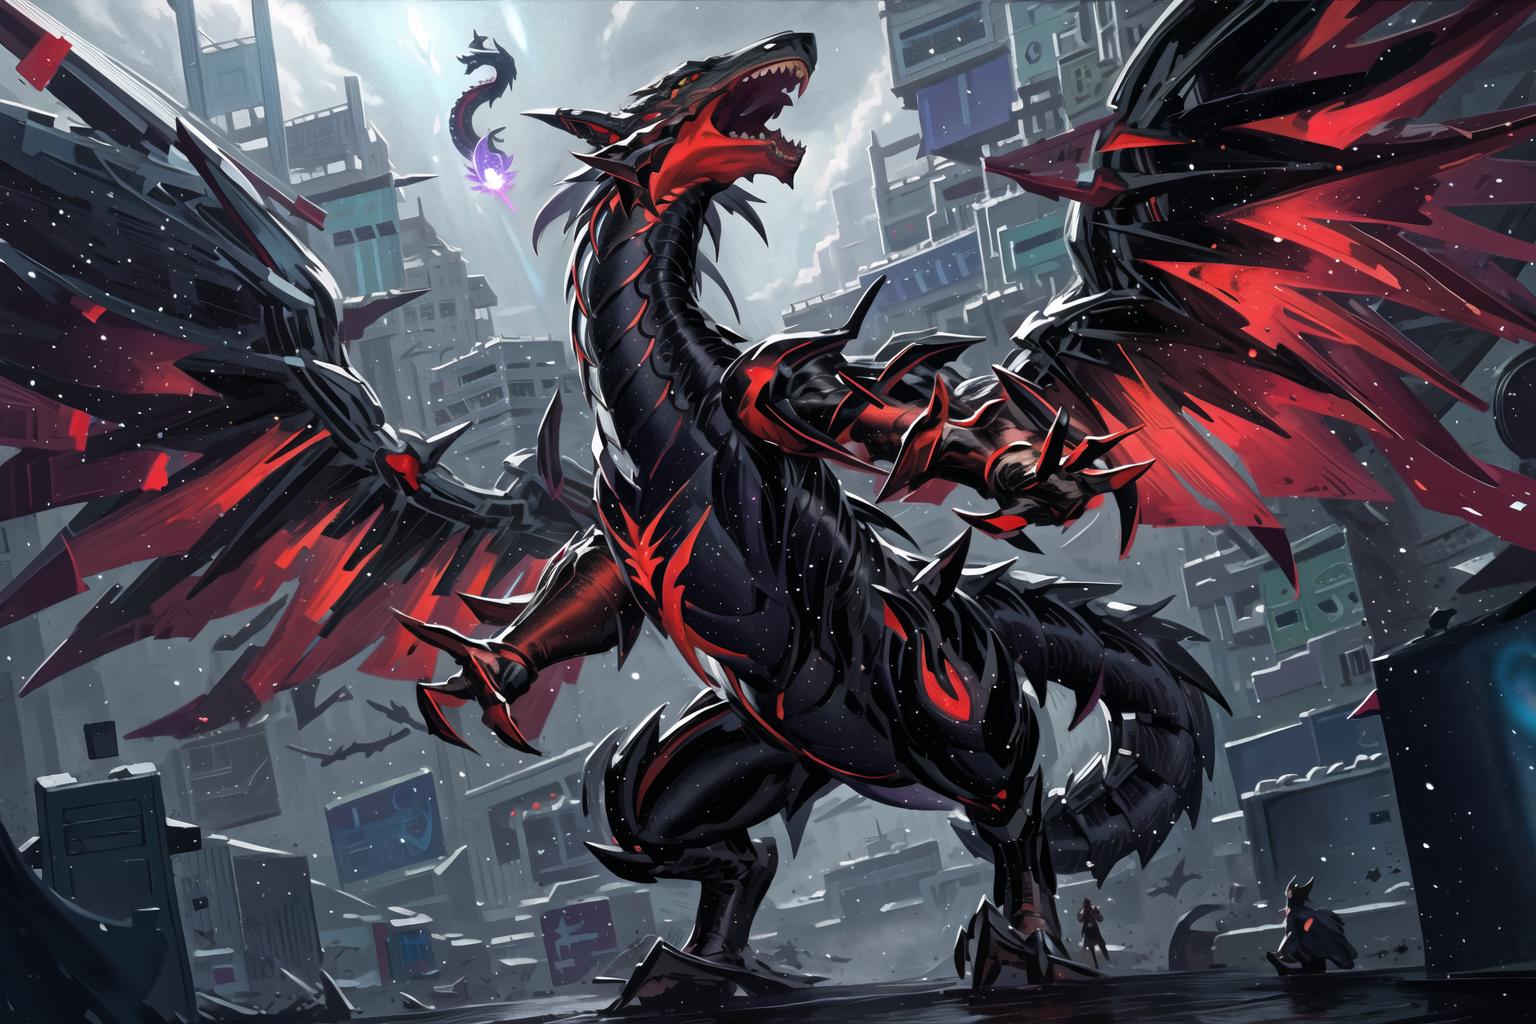 Fantastic Dragon image by Eisthol